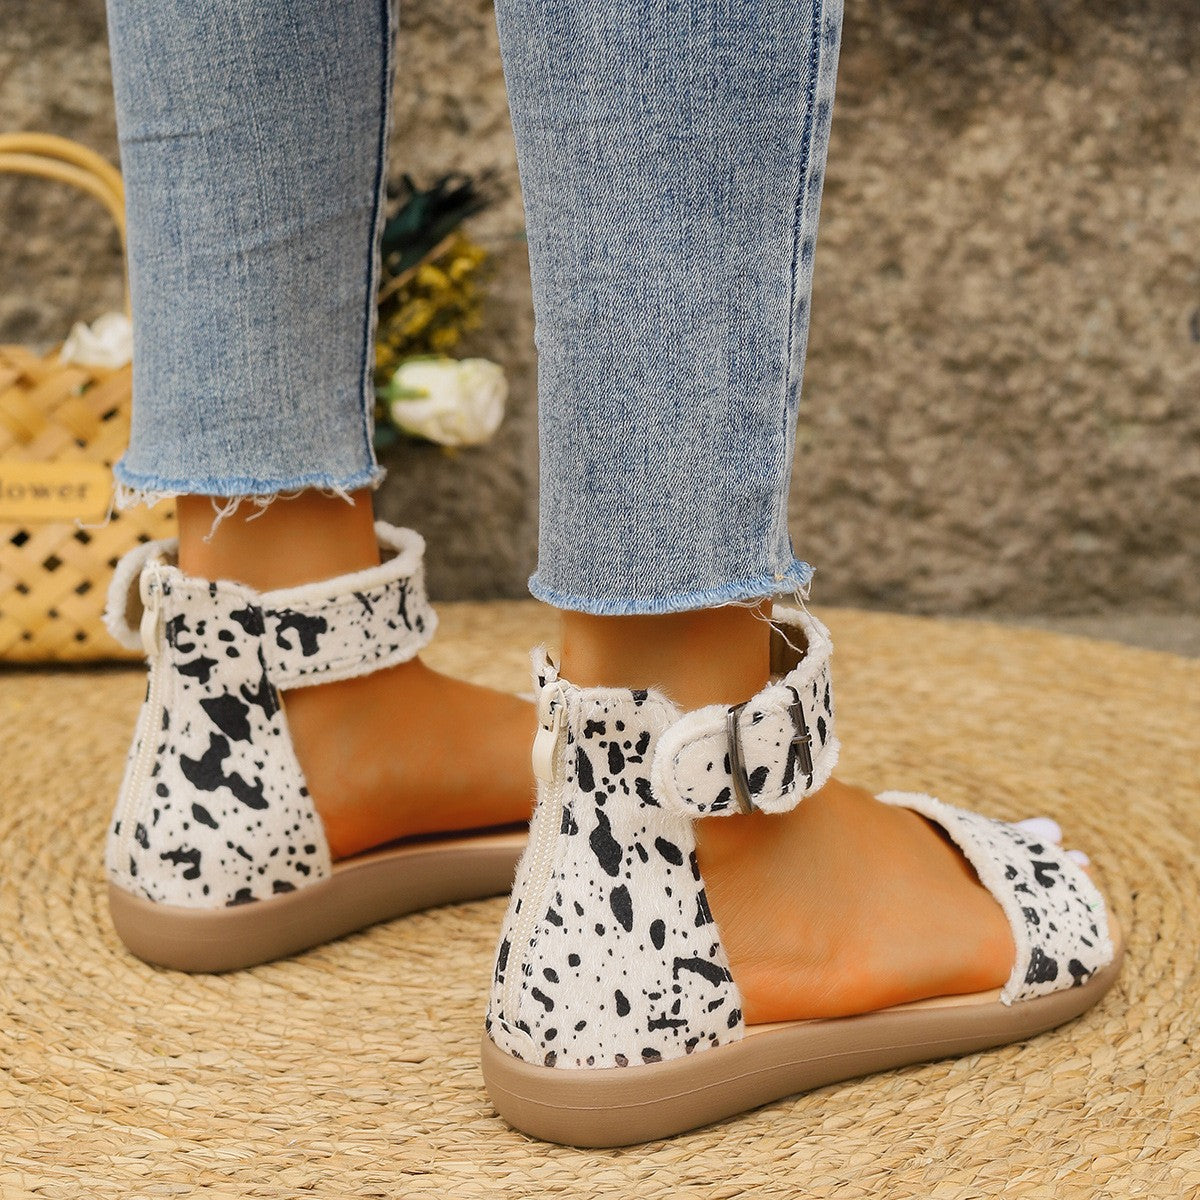 TEEK - Animal Print Open Toe Sandals SHOES TEEK Trend   